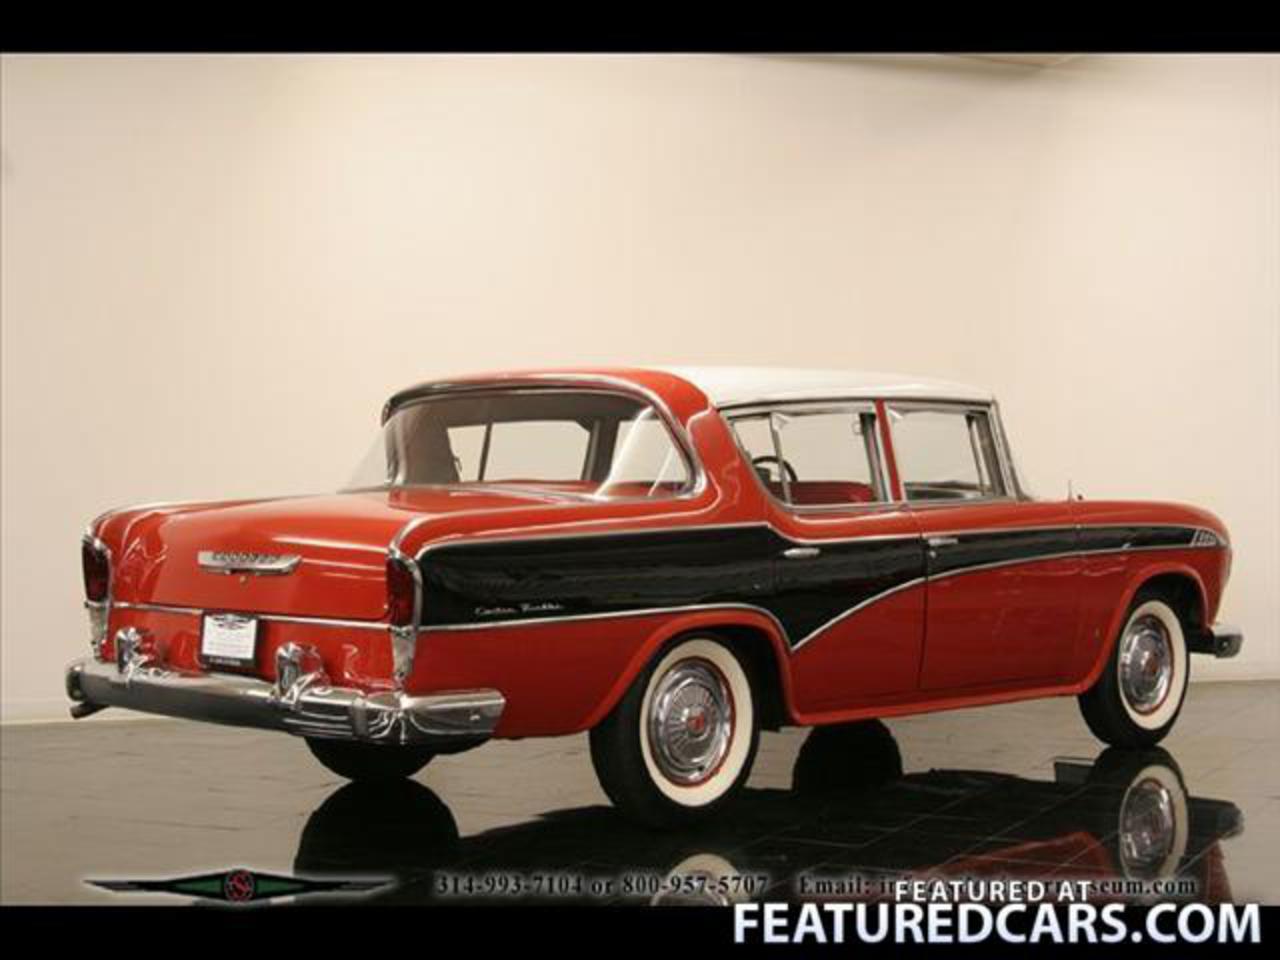 1956 Hudson Rambler - Saint Louis, MO, Used Cars for Sale ...